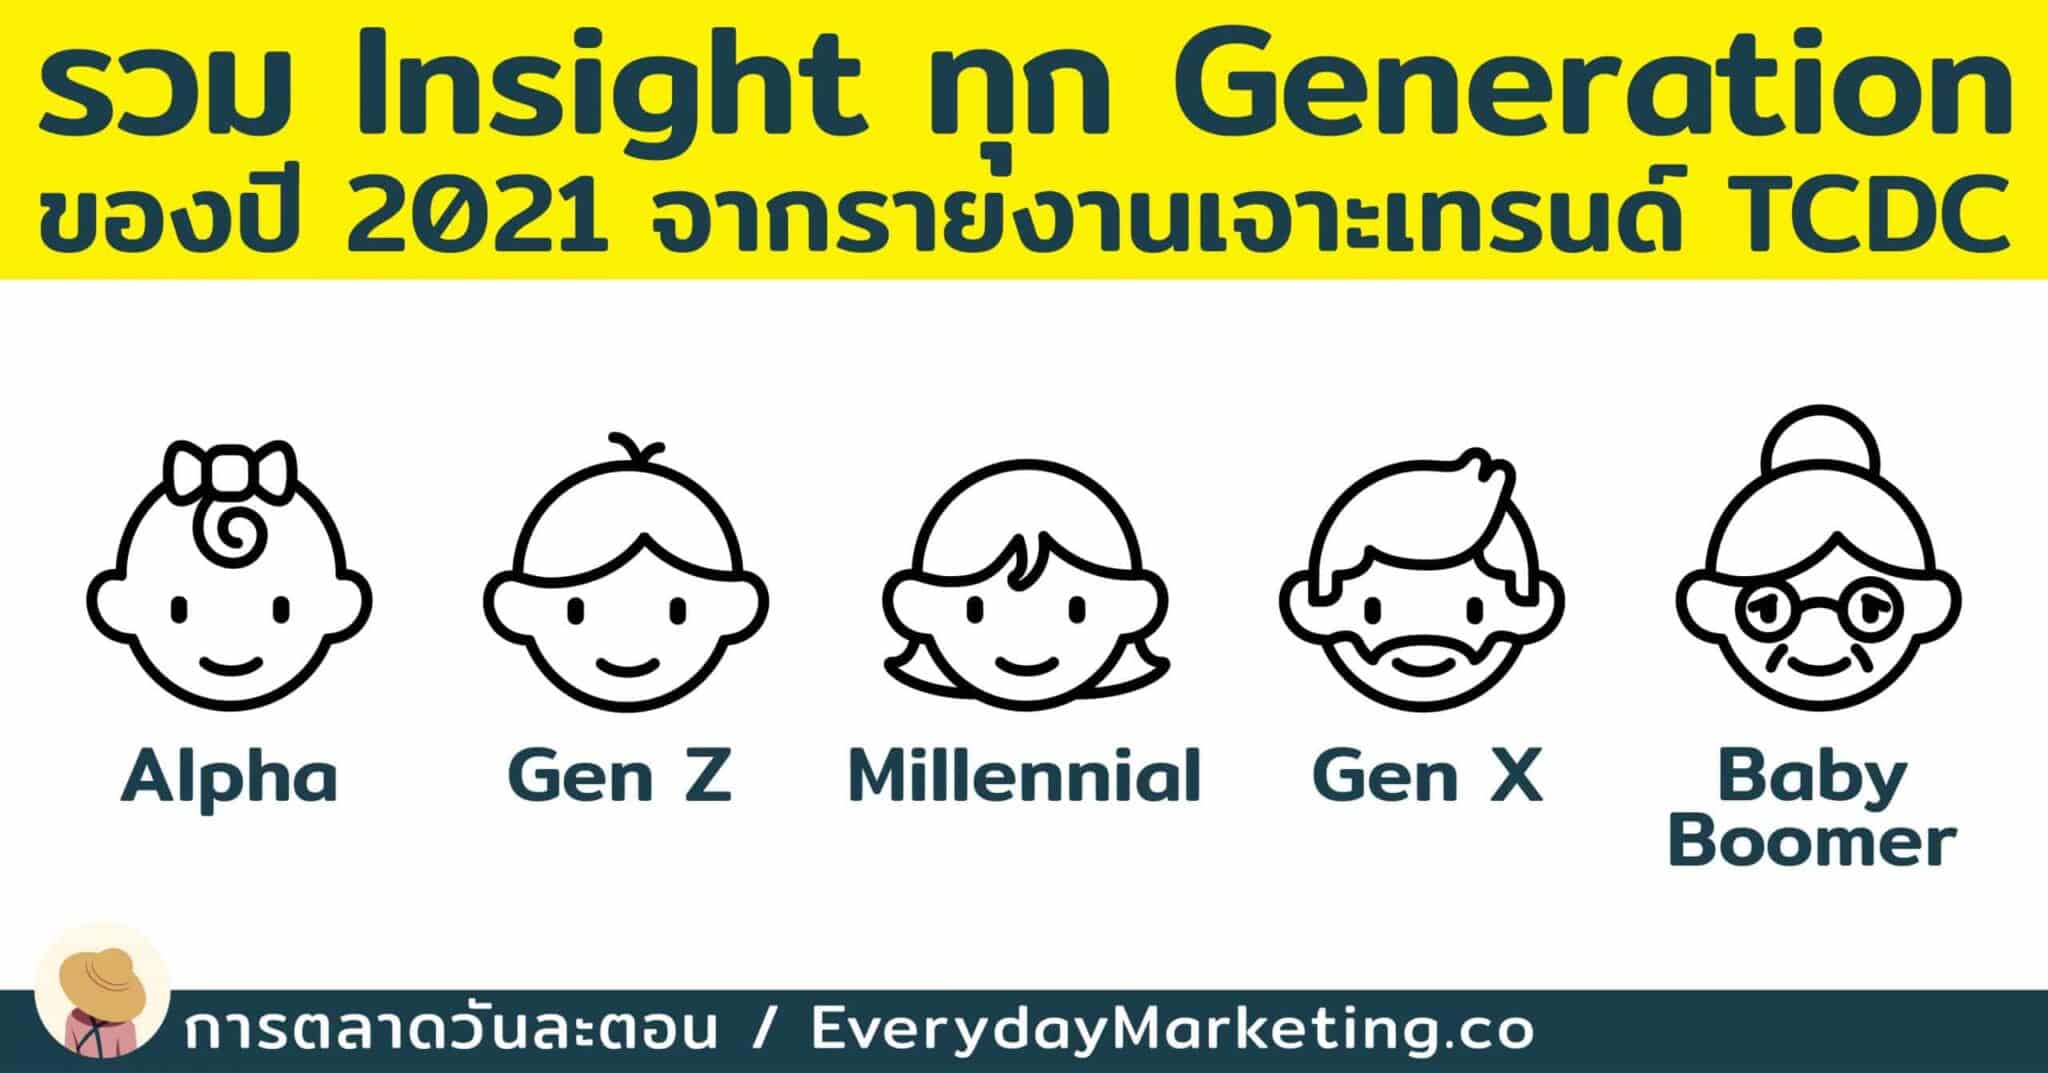 Insight ทุก Generation 2021 ตั้งแต่ Baby Boomer, Gen X, Gen Y, Gen Z ถึง Alpha